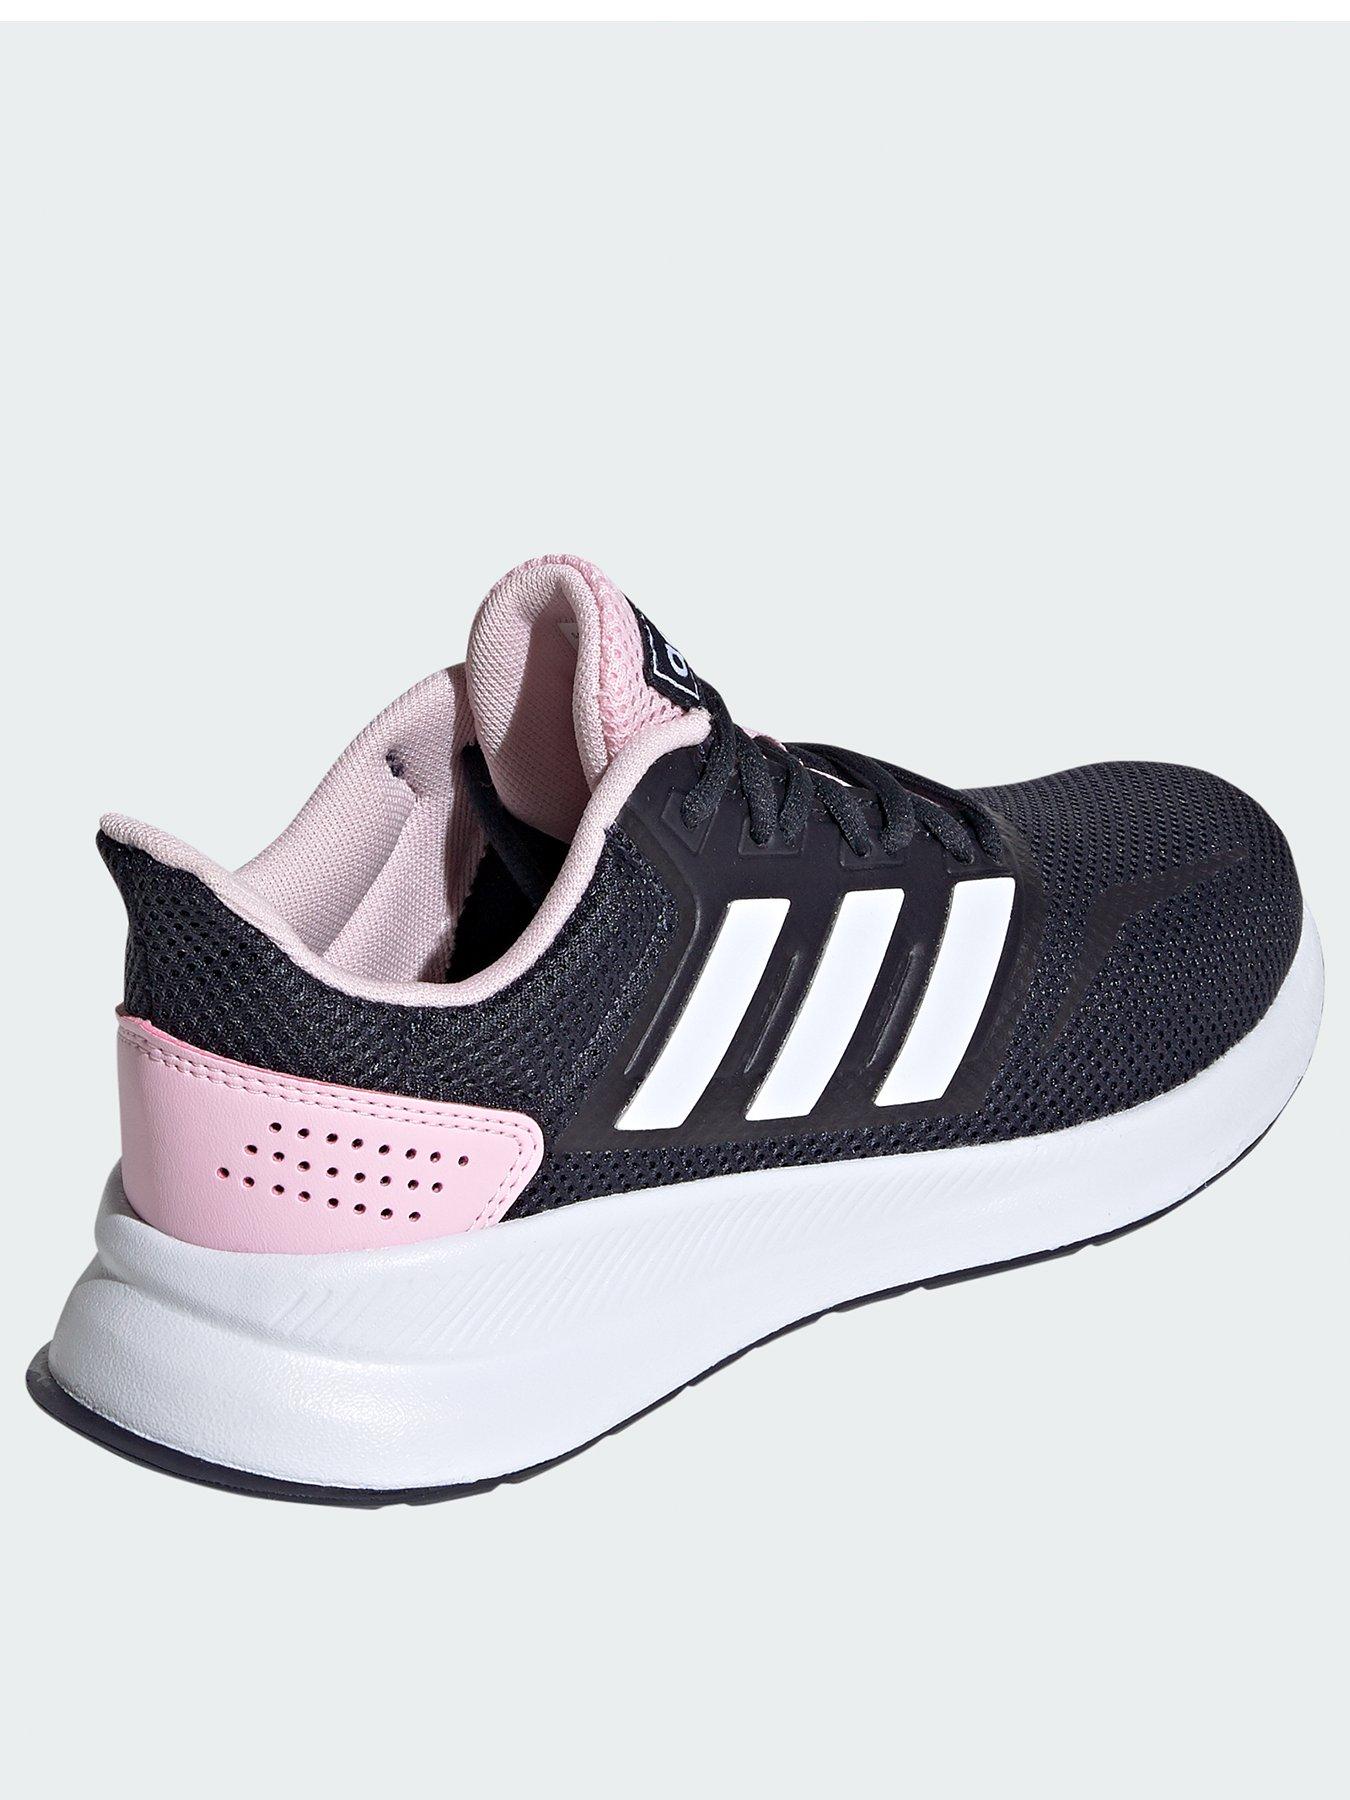 adidas runfalcon navy pink